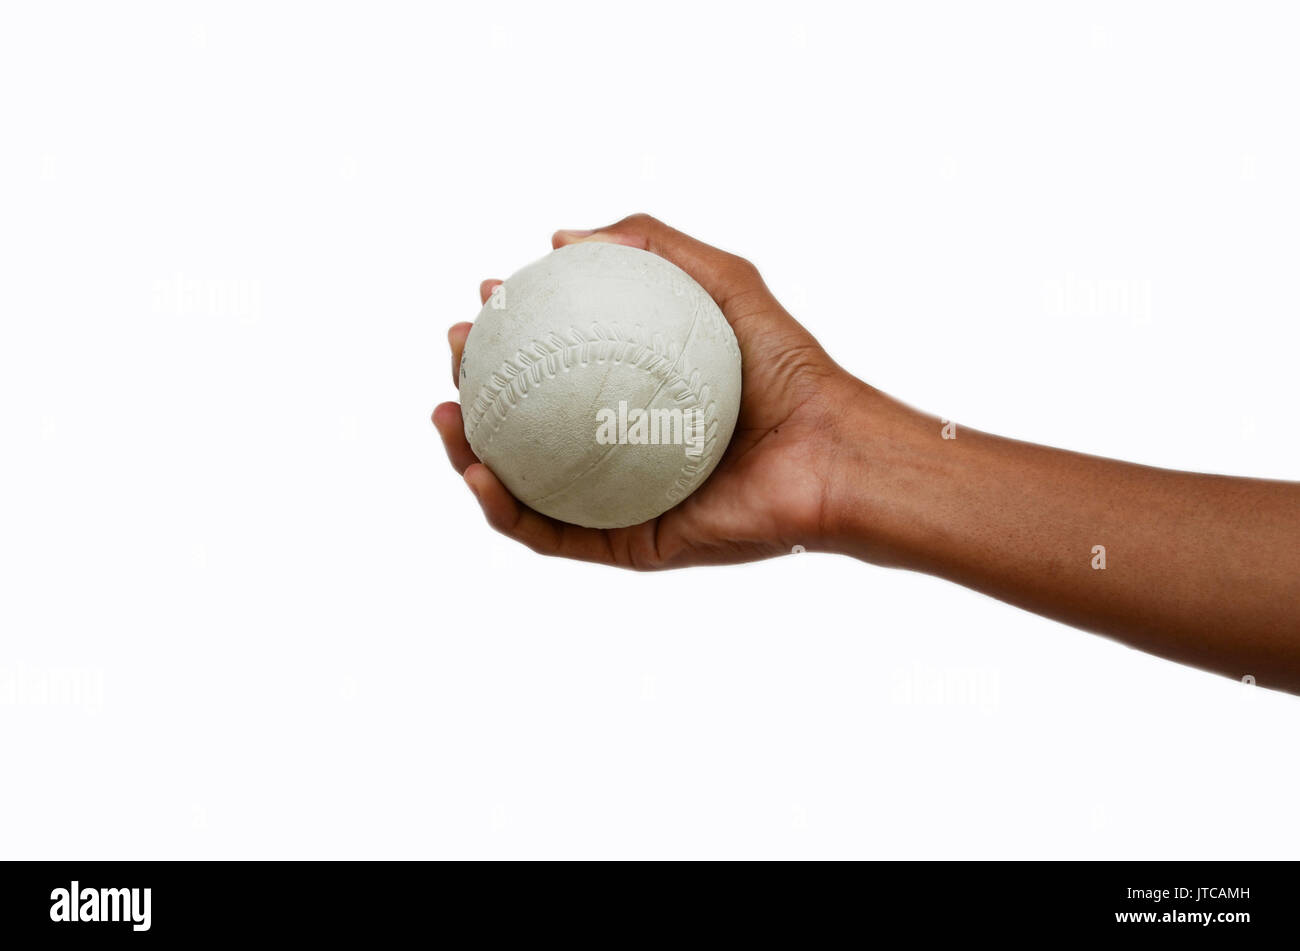 softballl in hand on white background Stock Photo